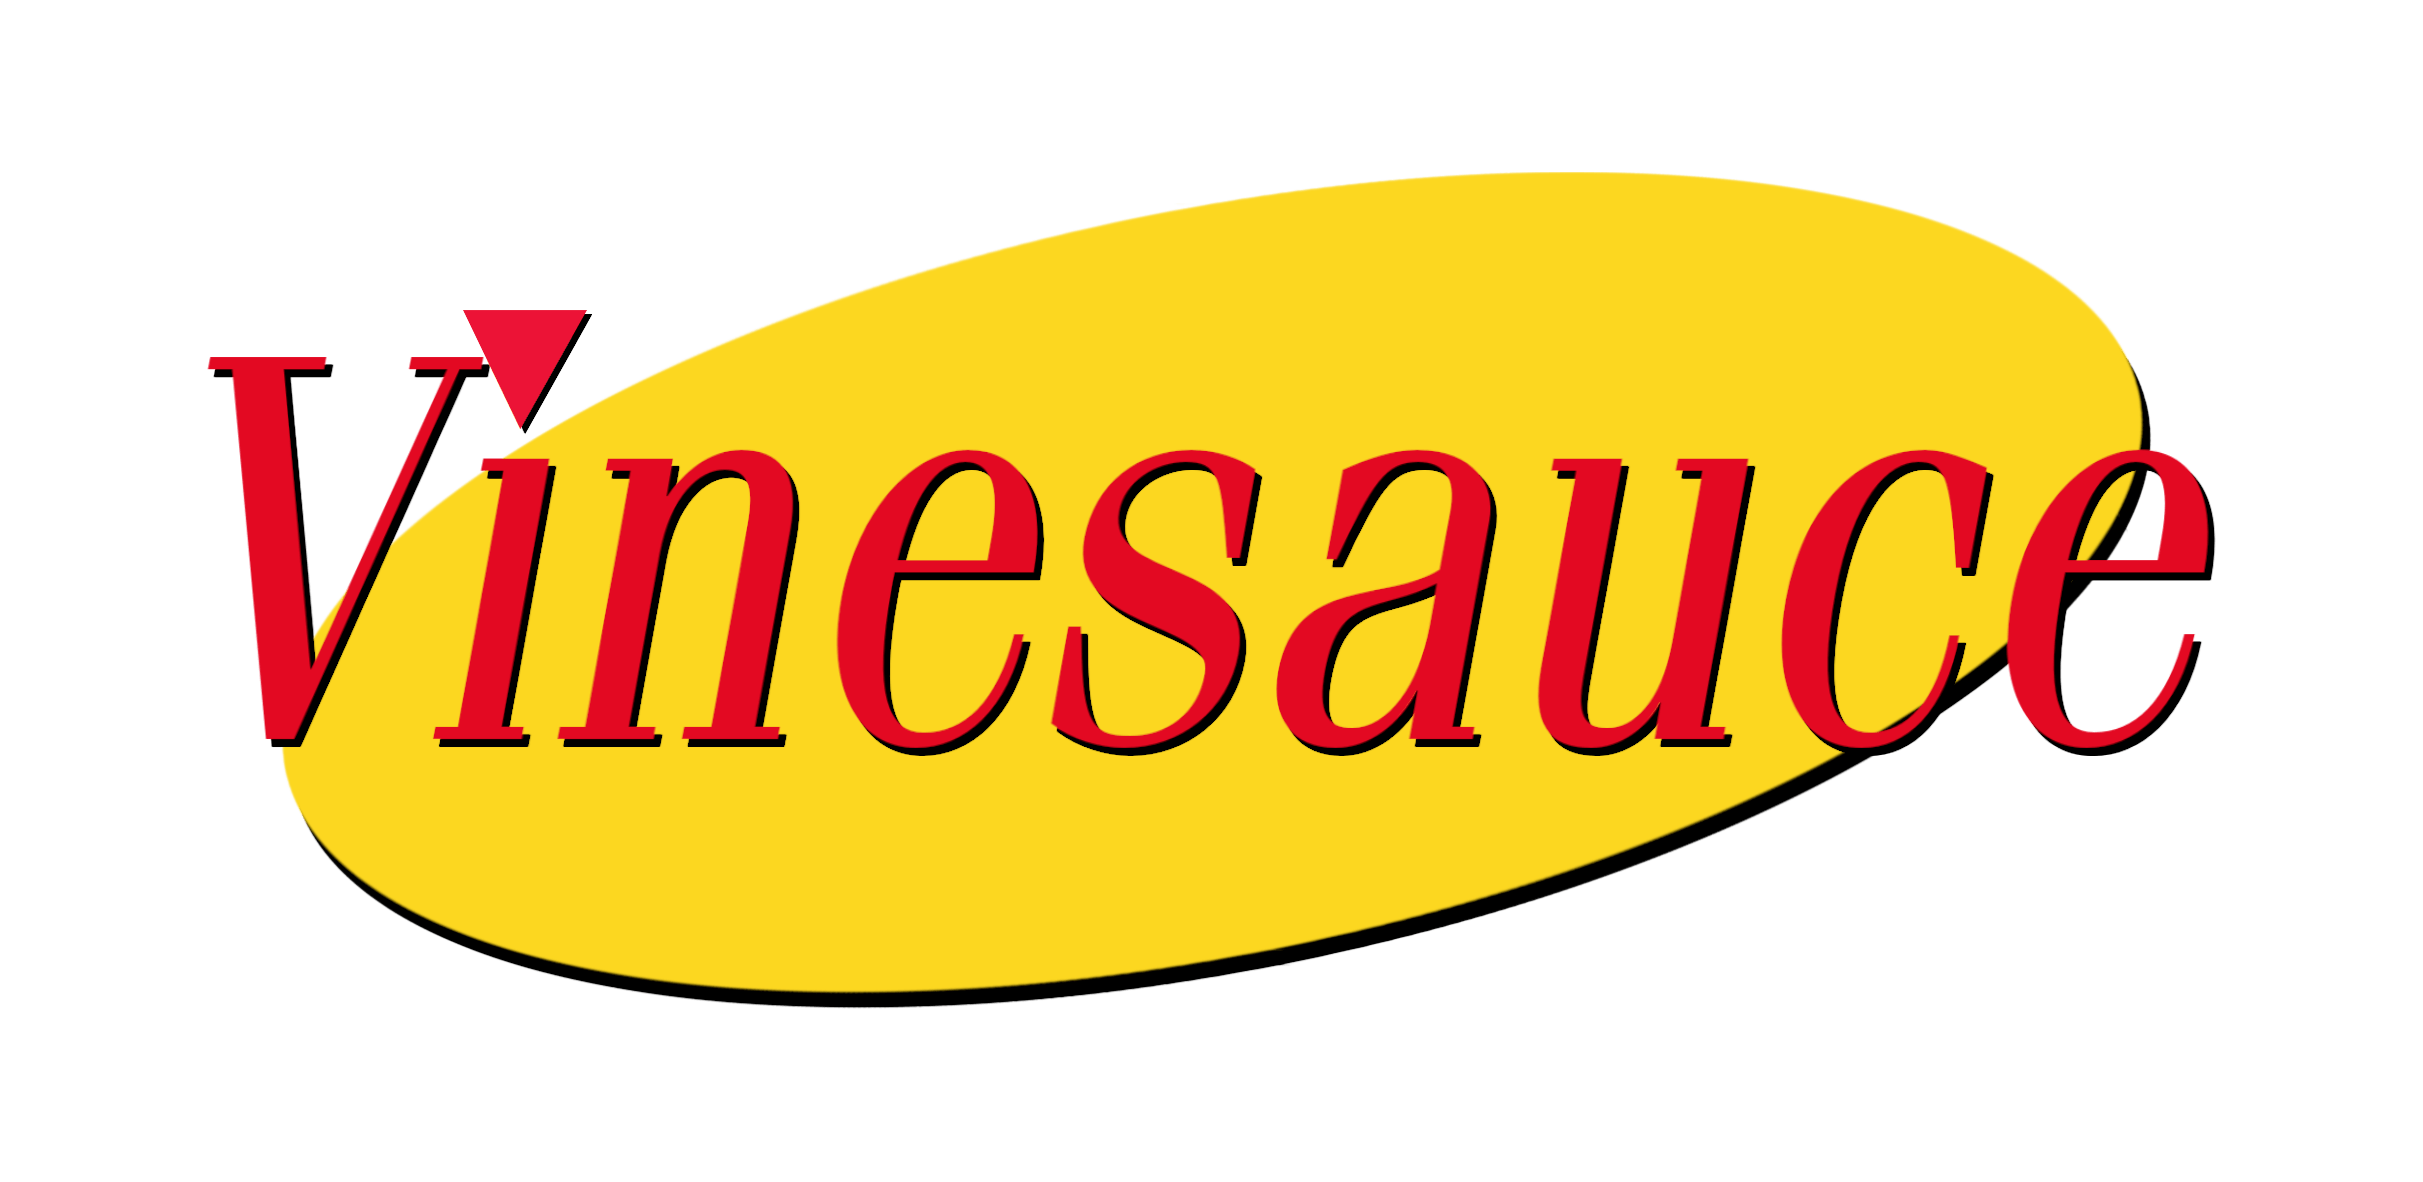 Seinfeld Logo - Vinesauce but it is a Seinfeld logo